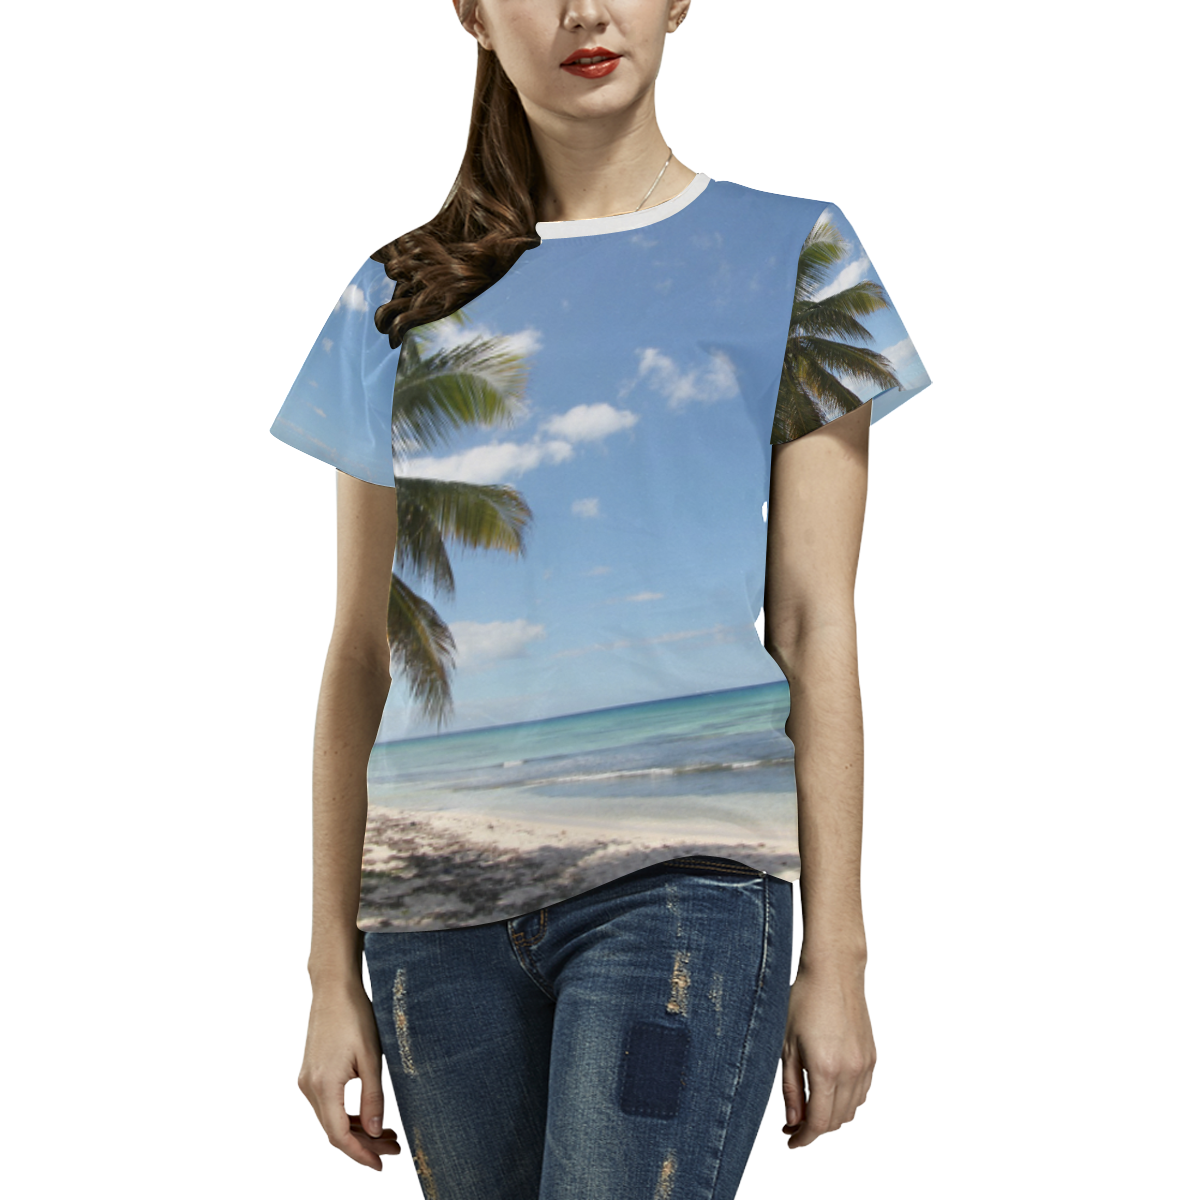 Isla Saona Caribbean Paradise Beach All Over Print T-shirt for Women/Large Size (USA Size) (Model T40)